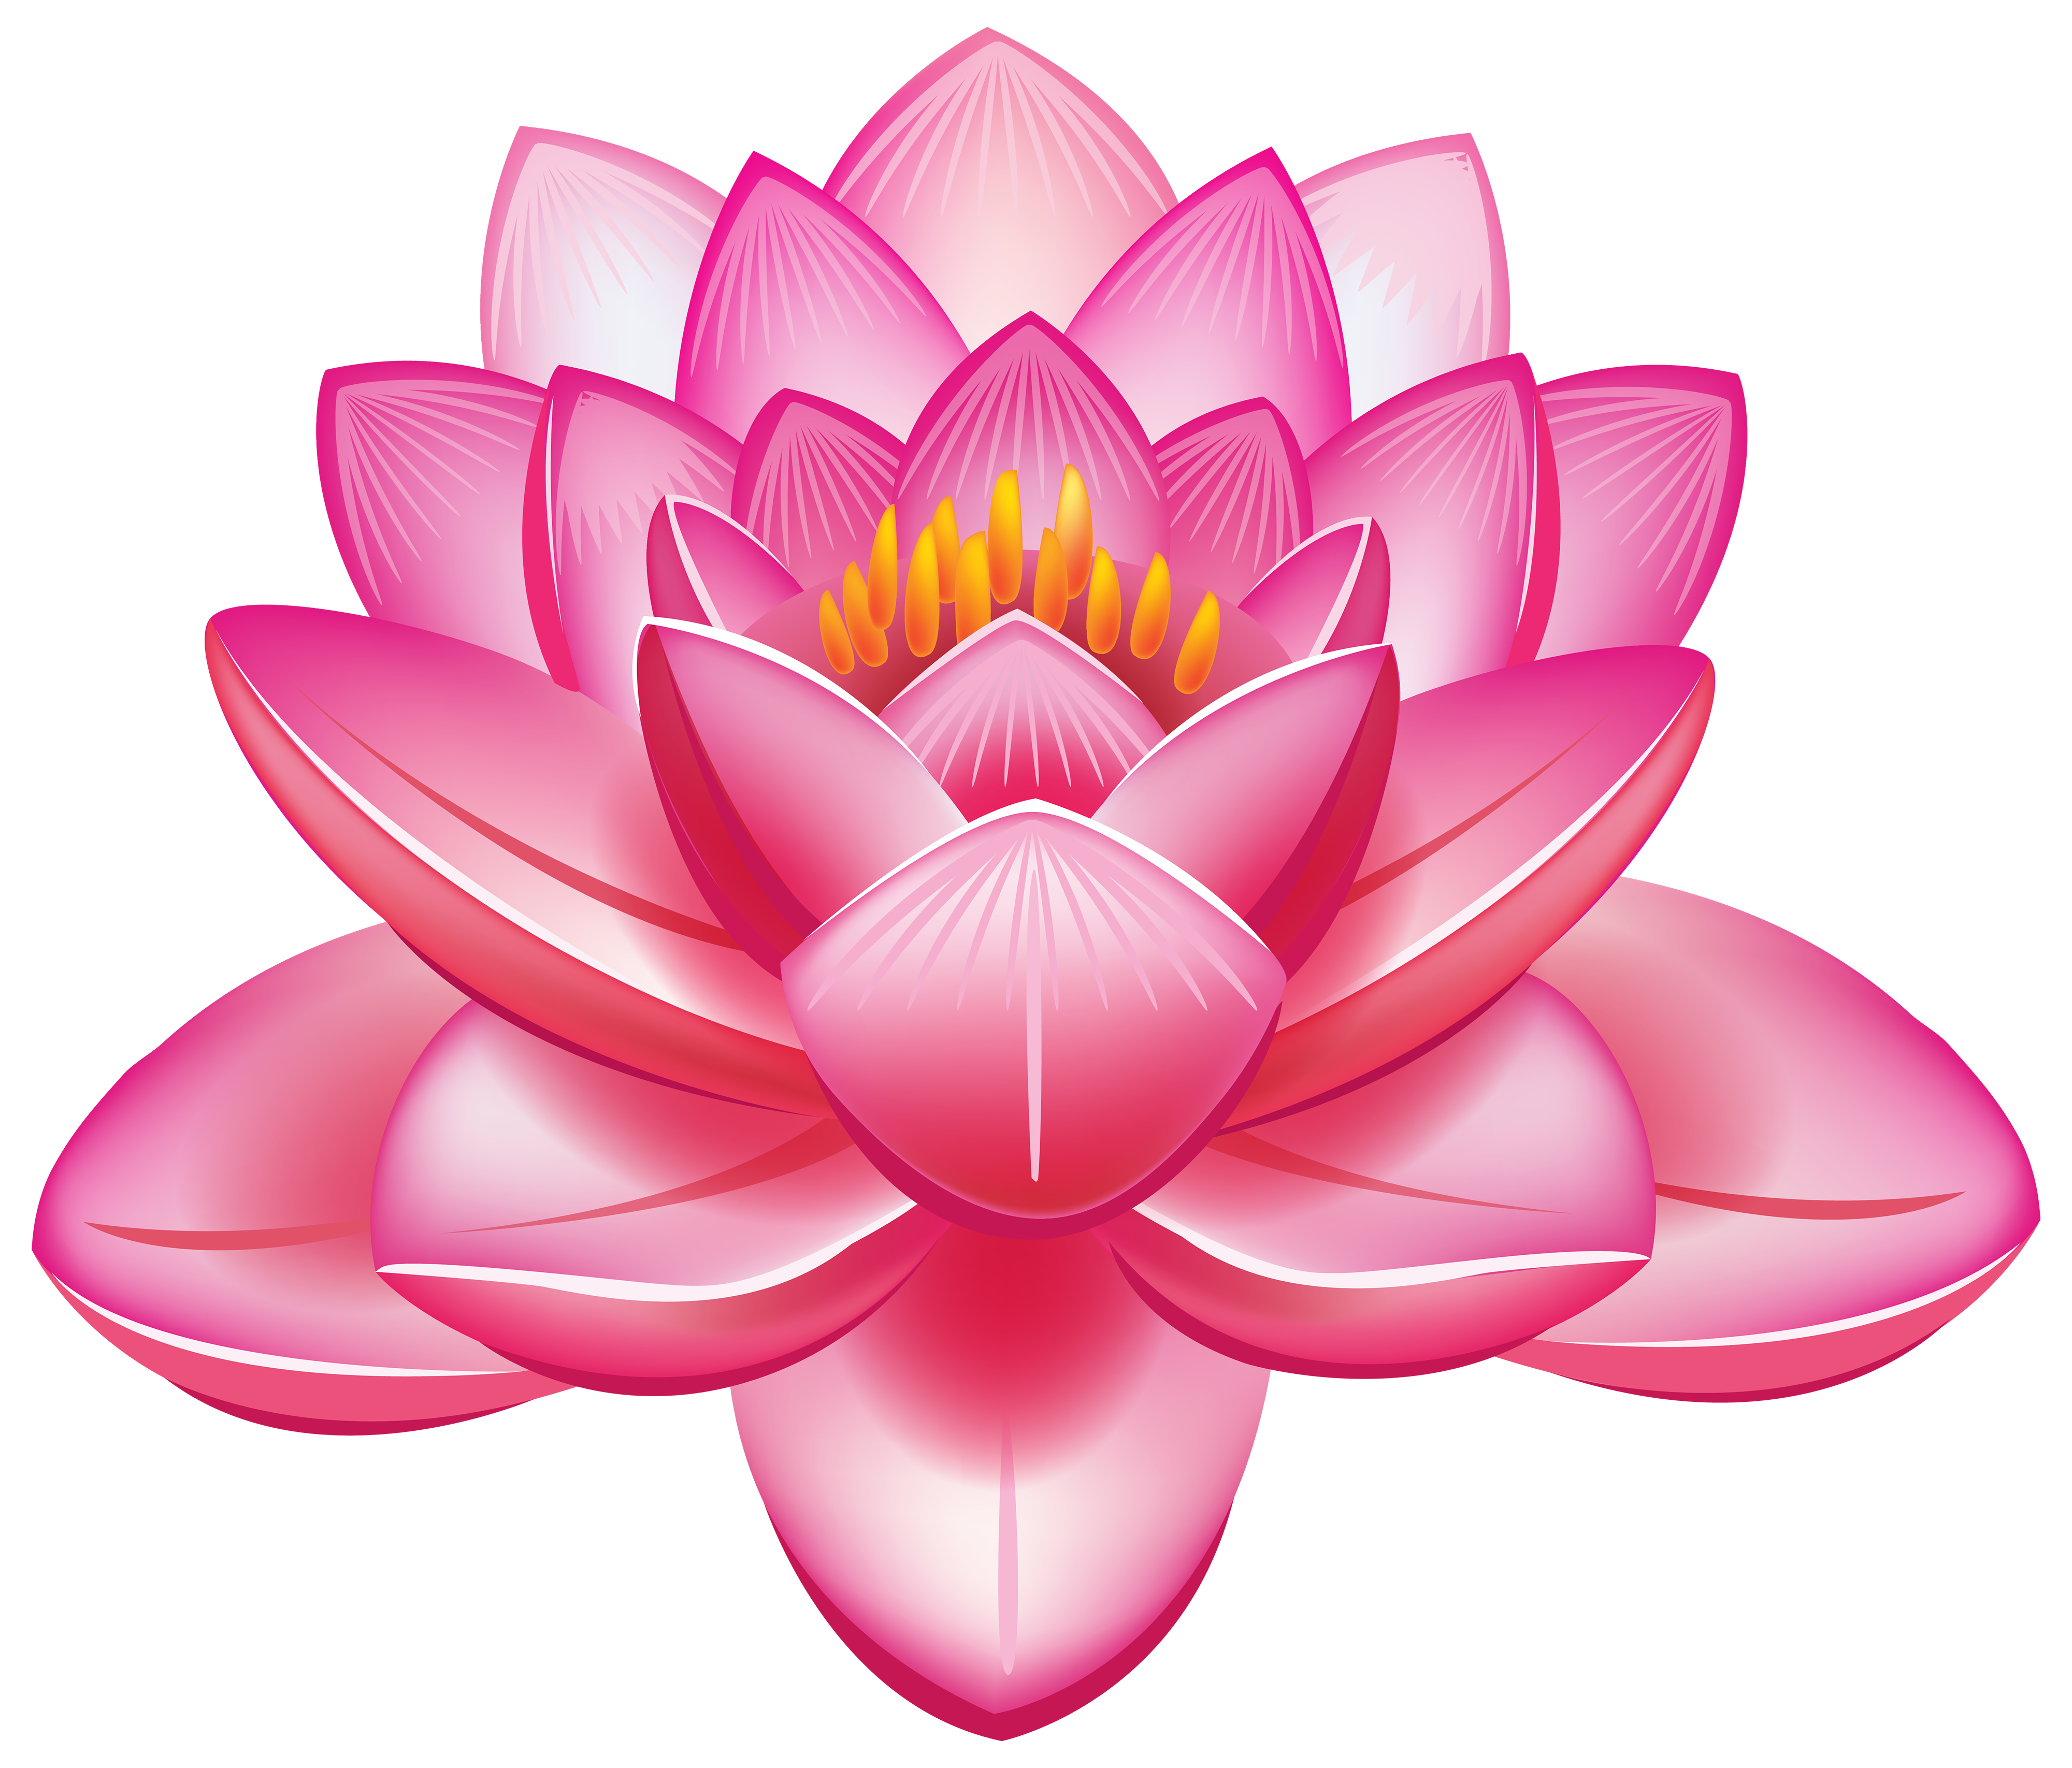 Lotus-Flower by IdunaHayaPhot